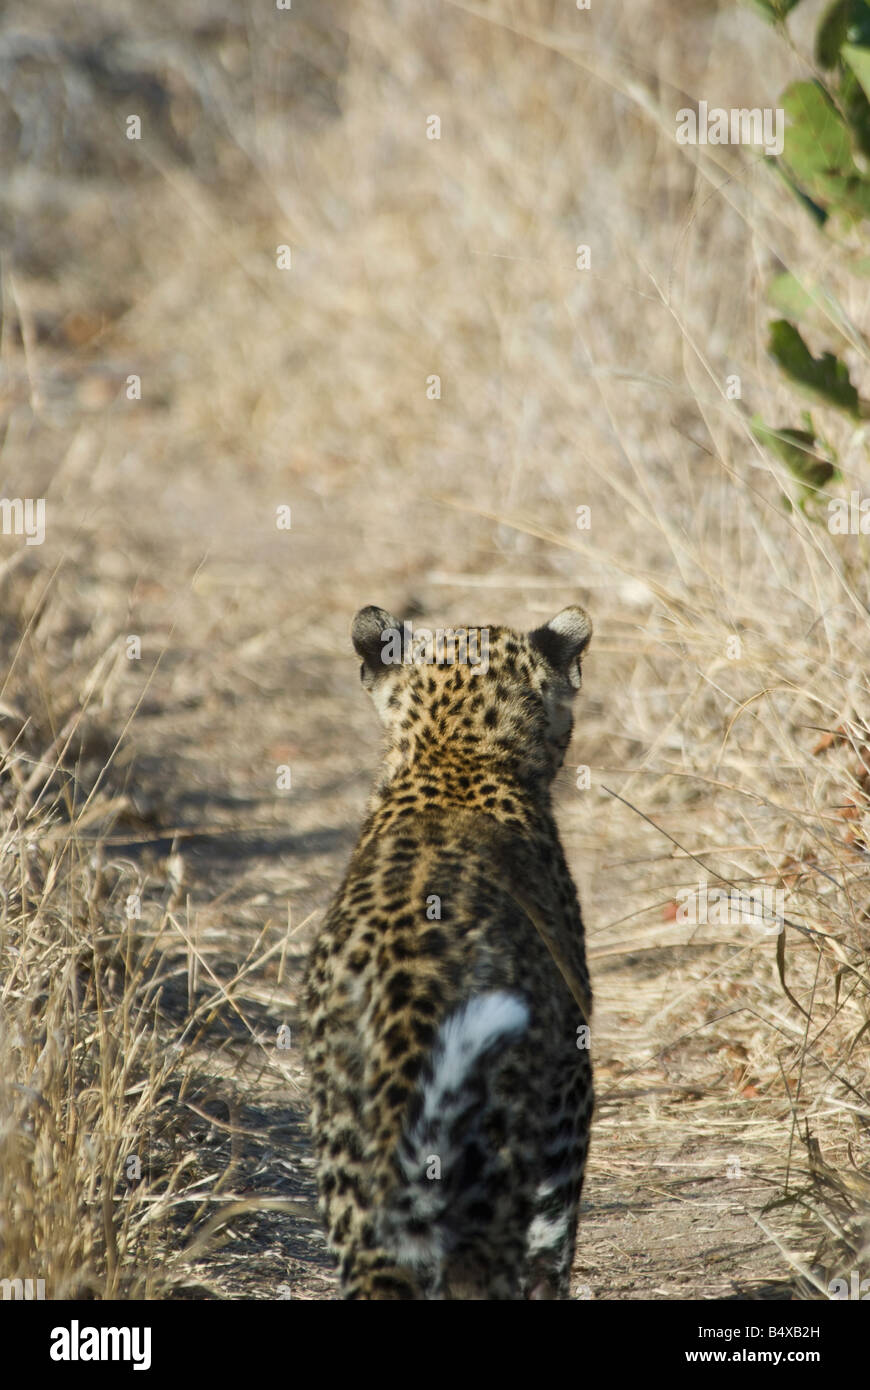 Leopard walking in chemin herbeux Banque D'Images